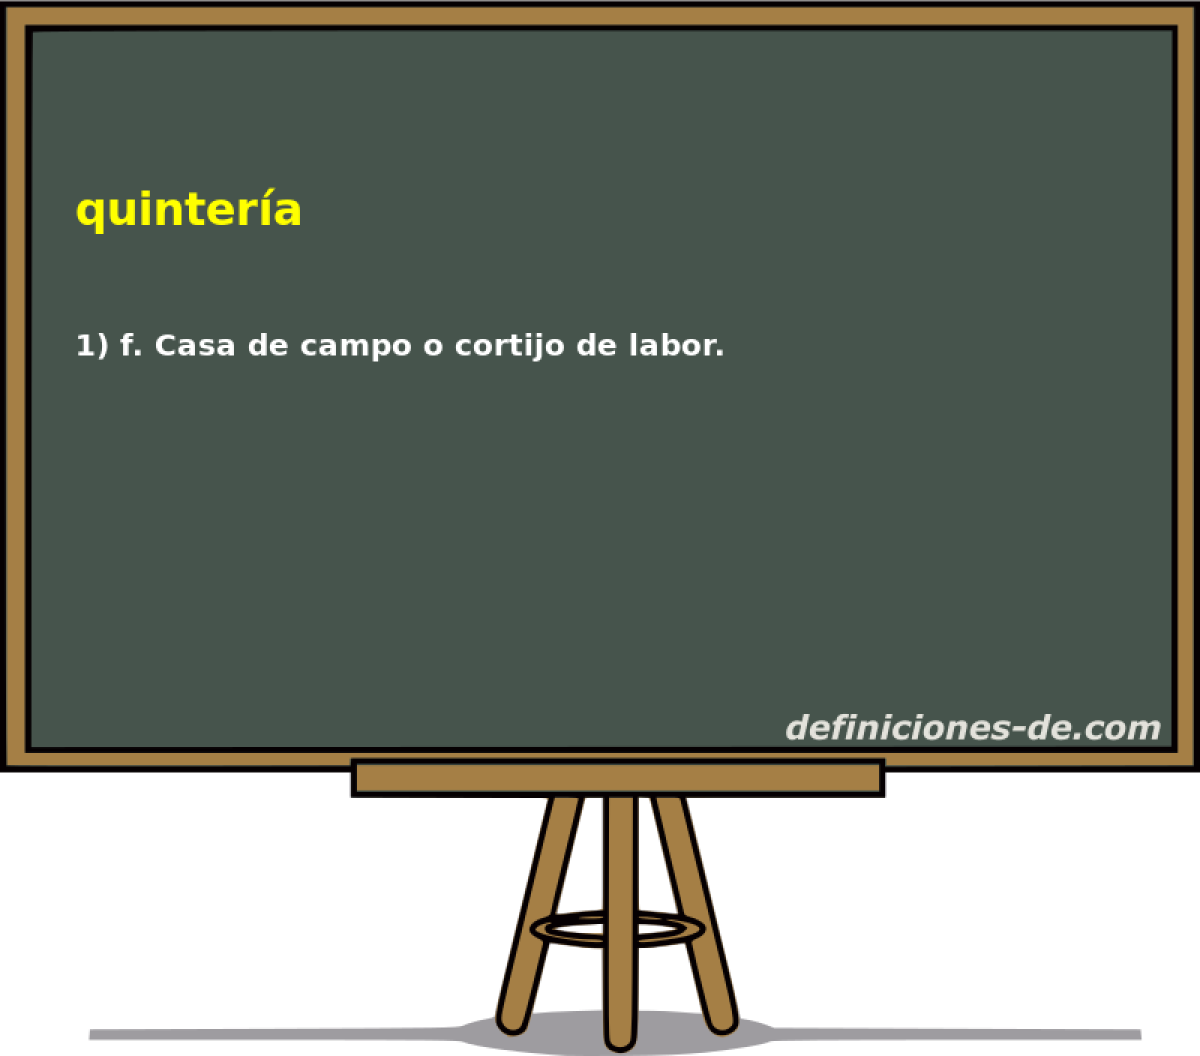 quintera 